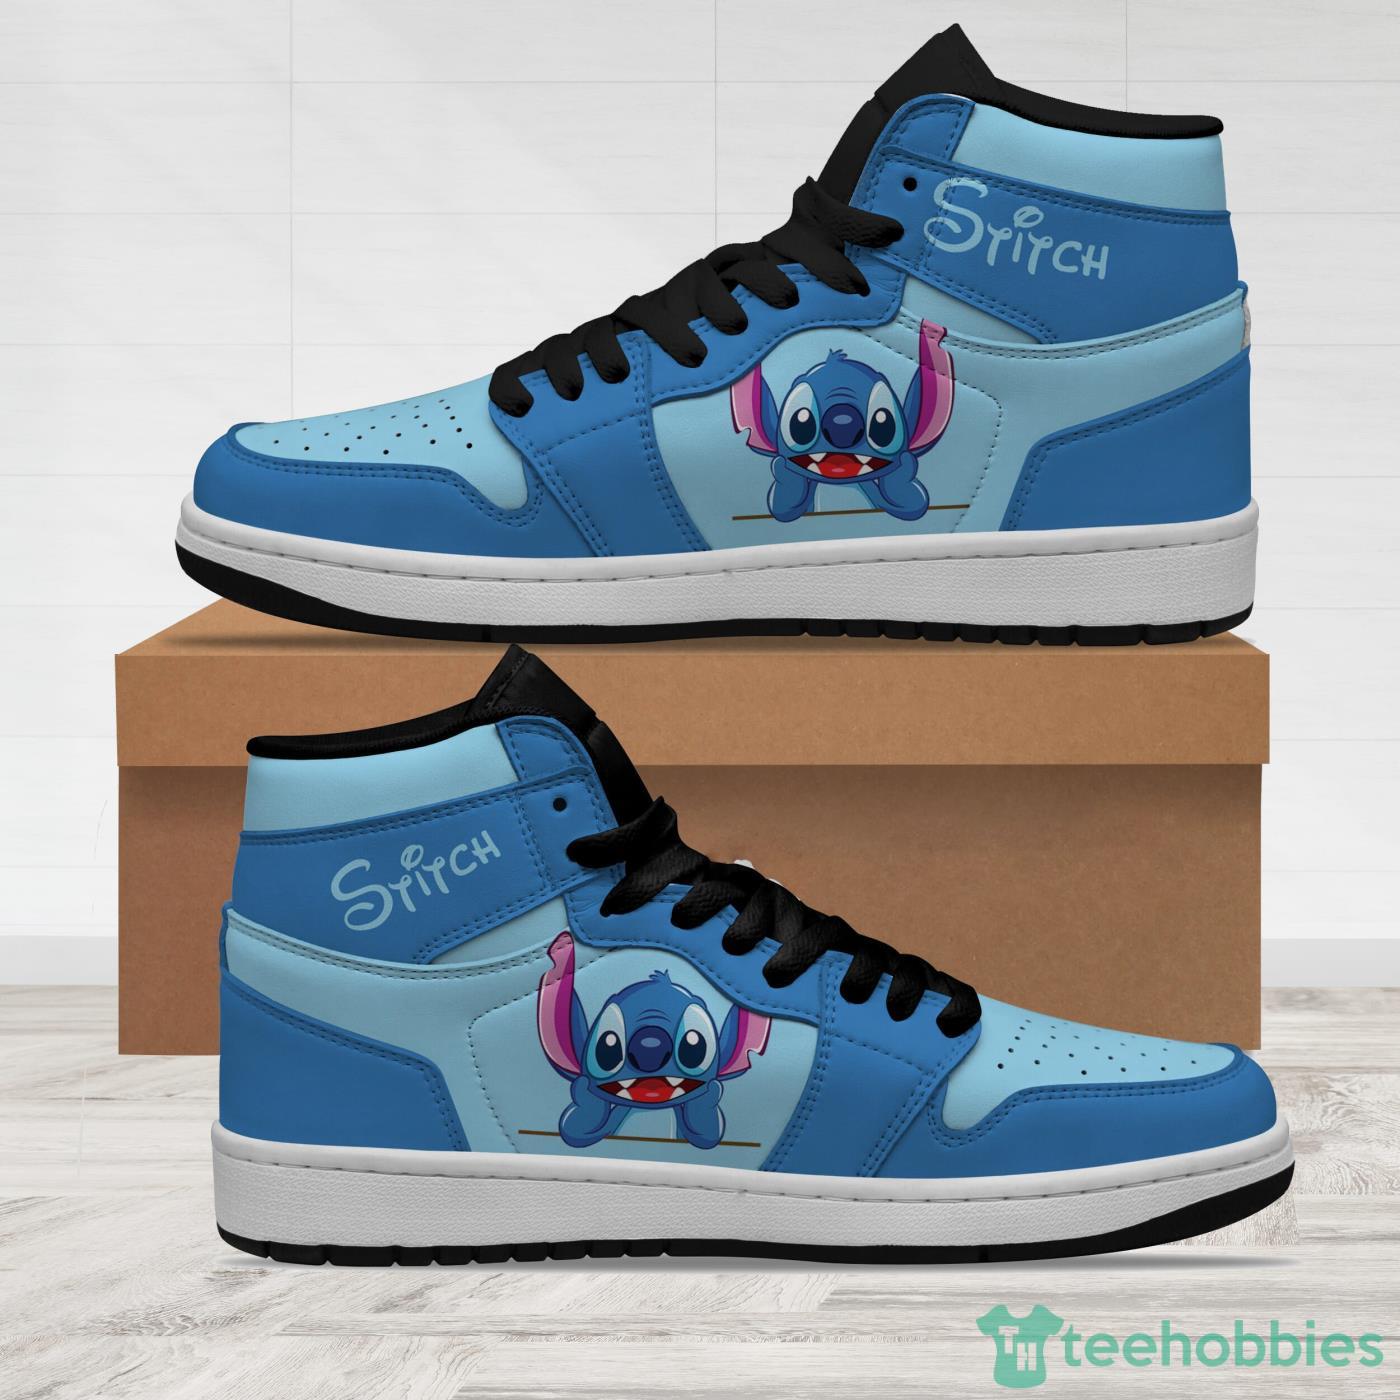 Stitch Blue Sneaker Boots Disney Air Jordan Hightop Shoes Product Photo 1